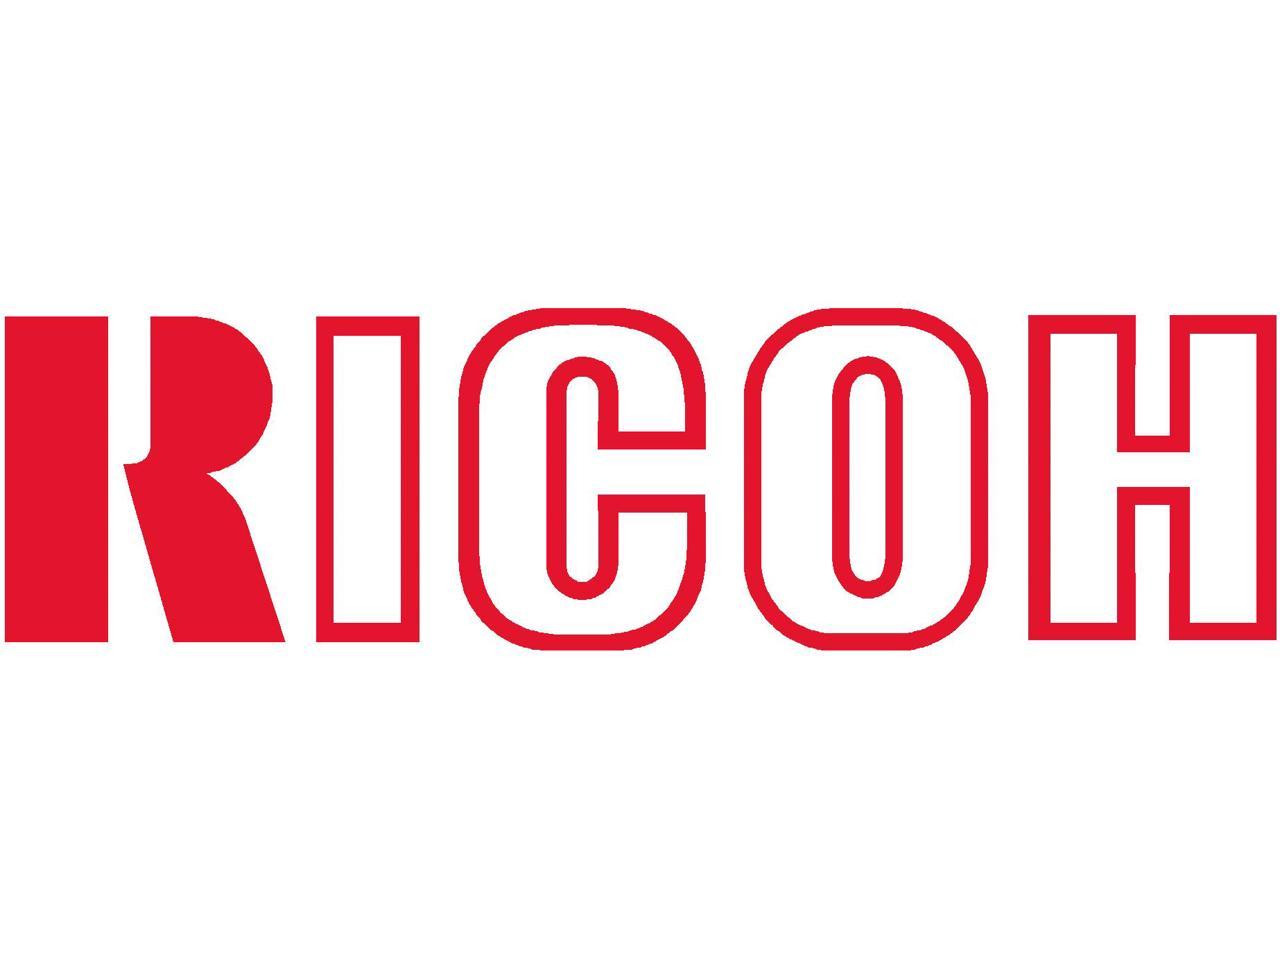 Yellow Toner Cartridge for Ricoh 841781 MP C6502SP, MP C8002SP, Genuine Ricoh Brand